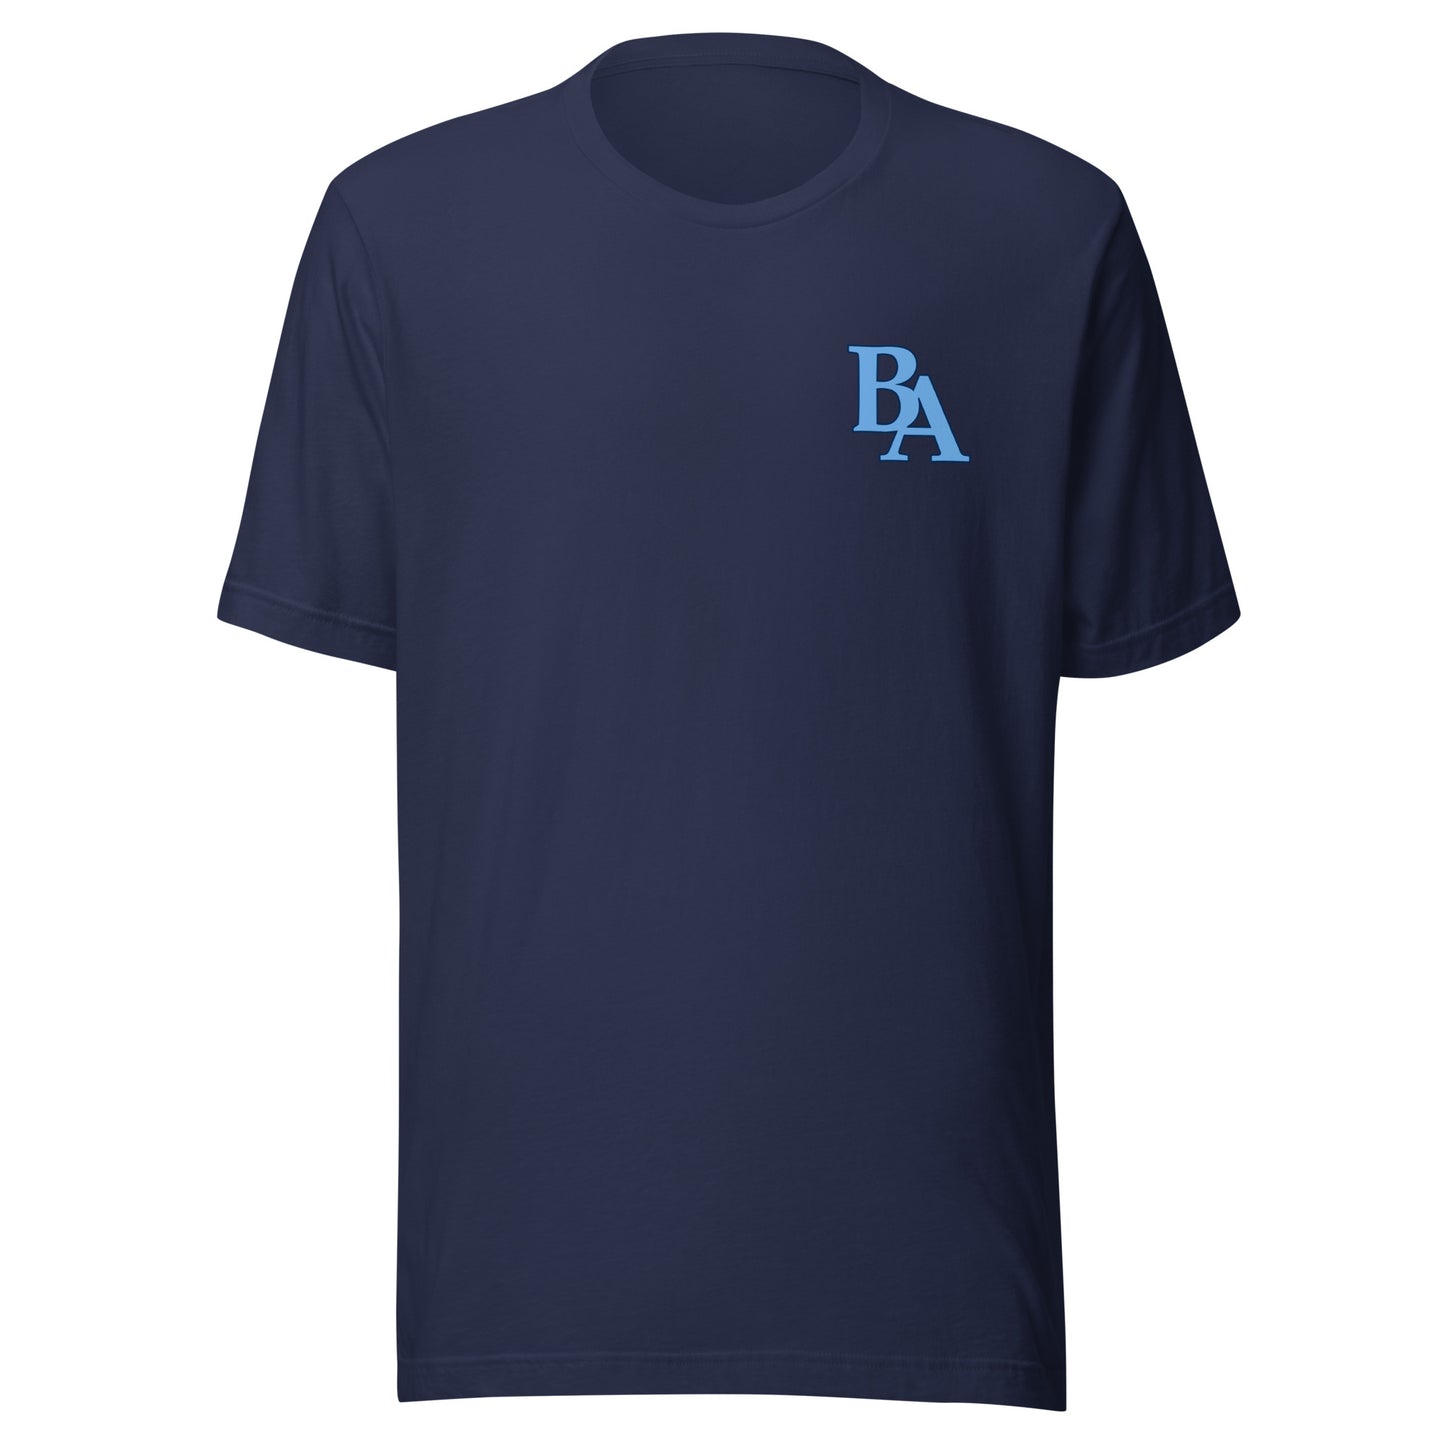 BA Classic Fit T-Shirt